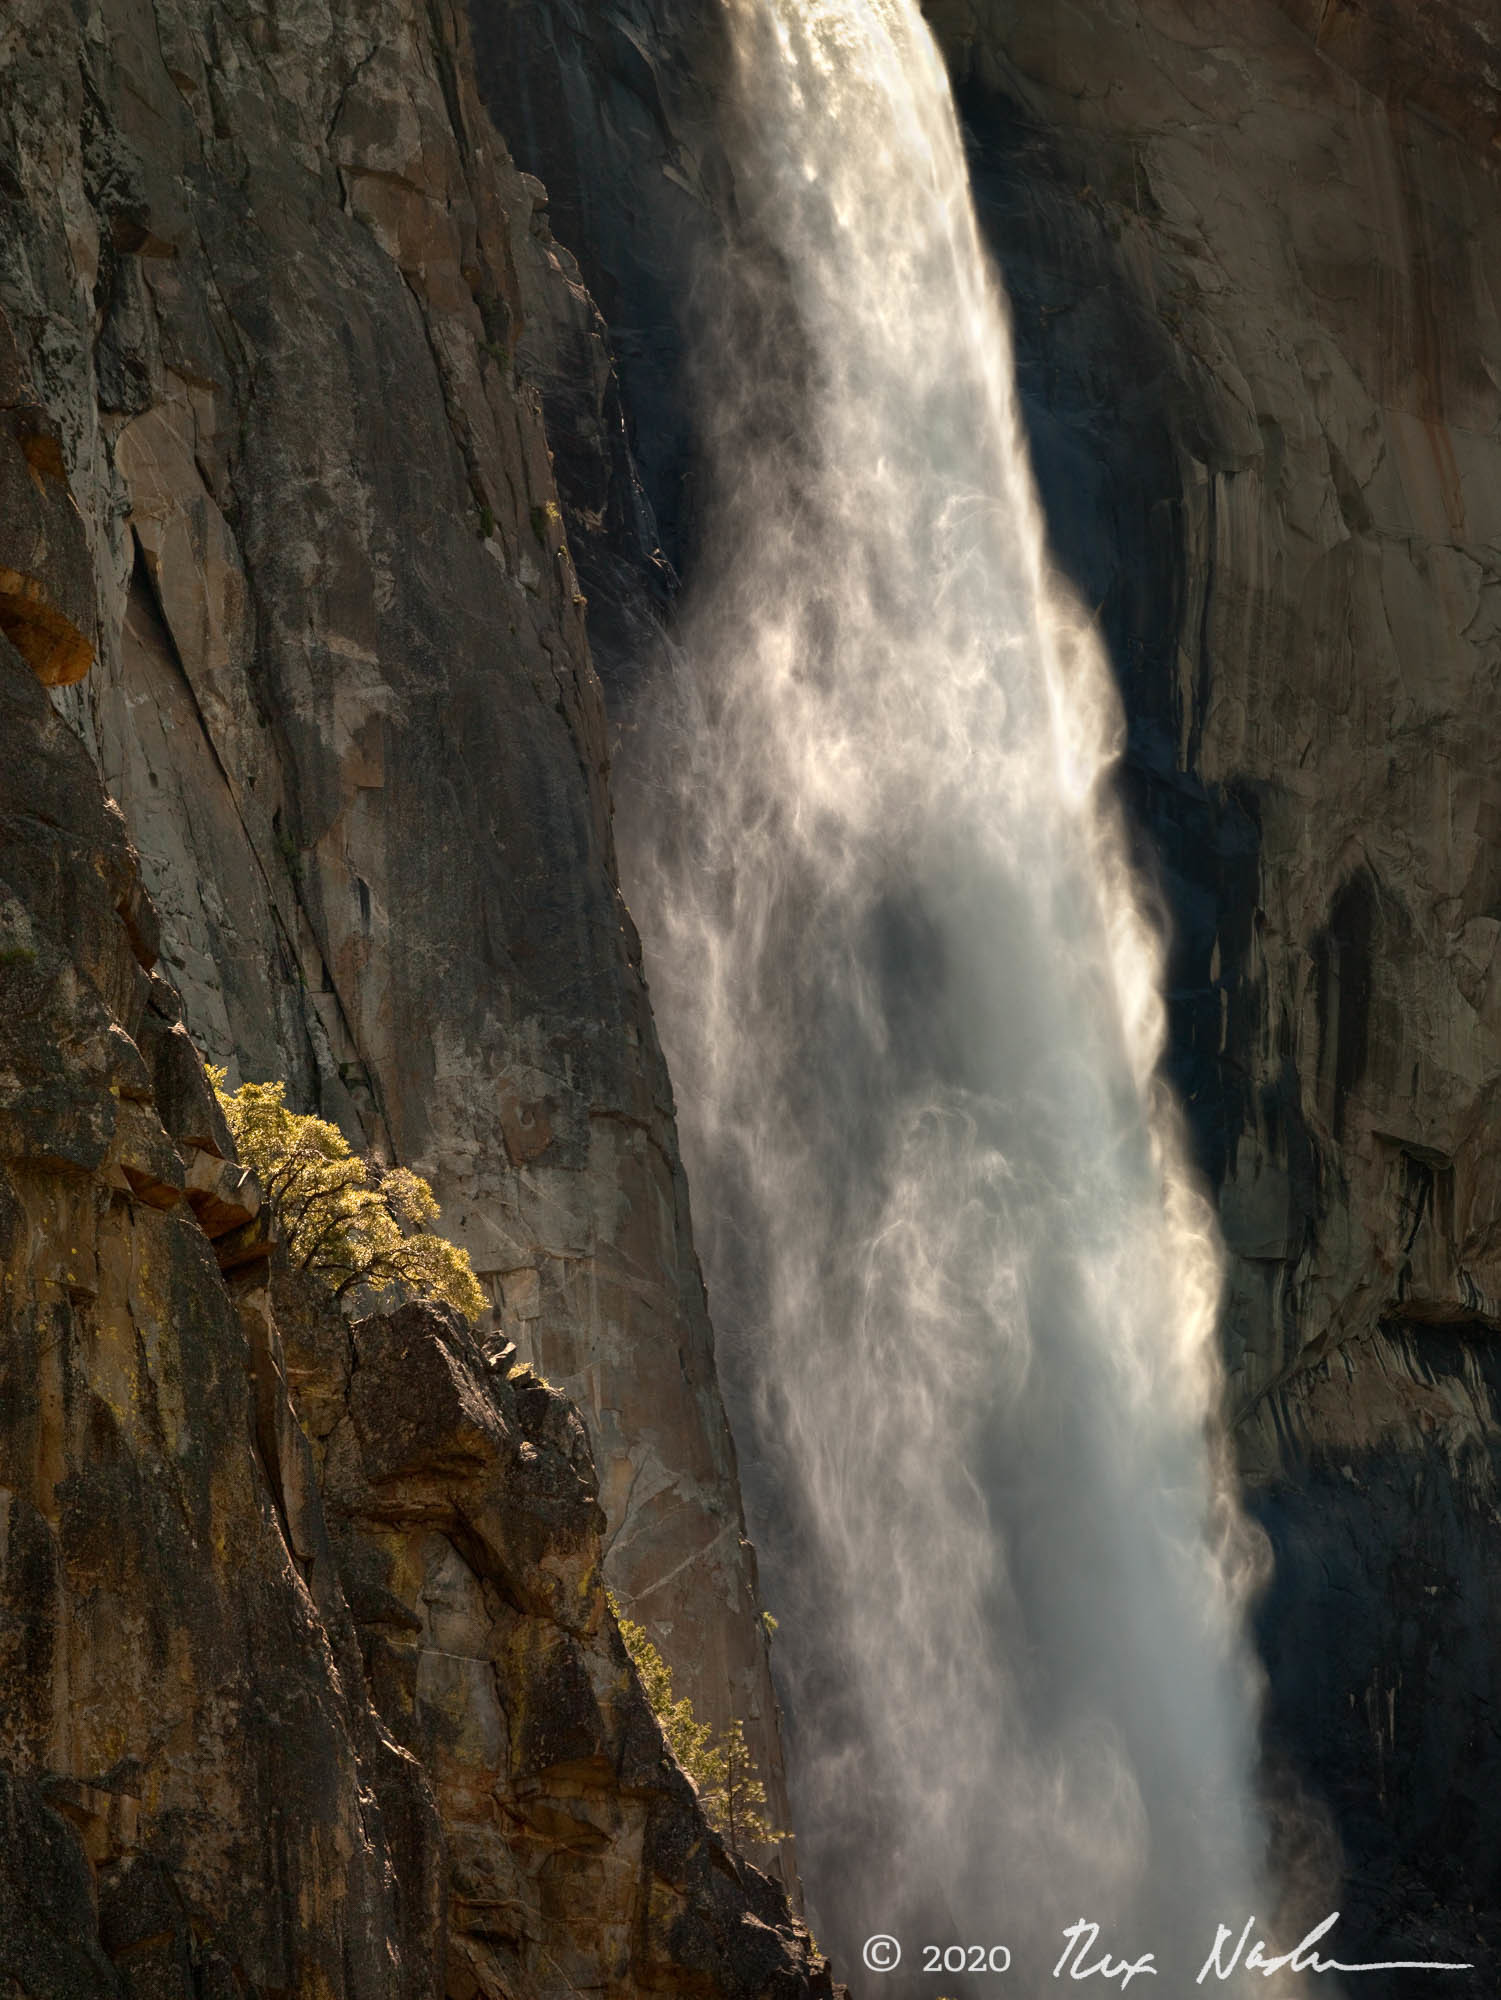 Vertiginous - Near Bridalveil Falls, Yosemite